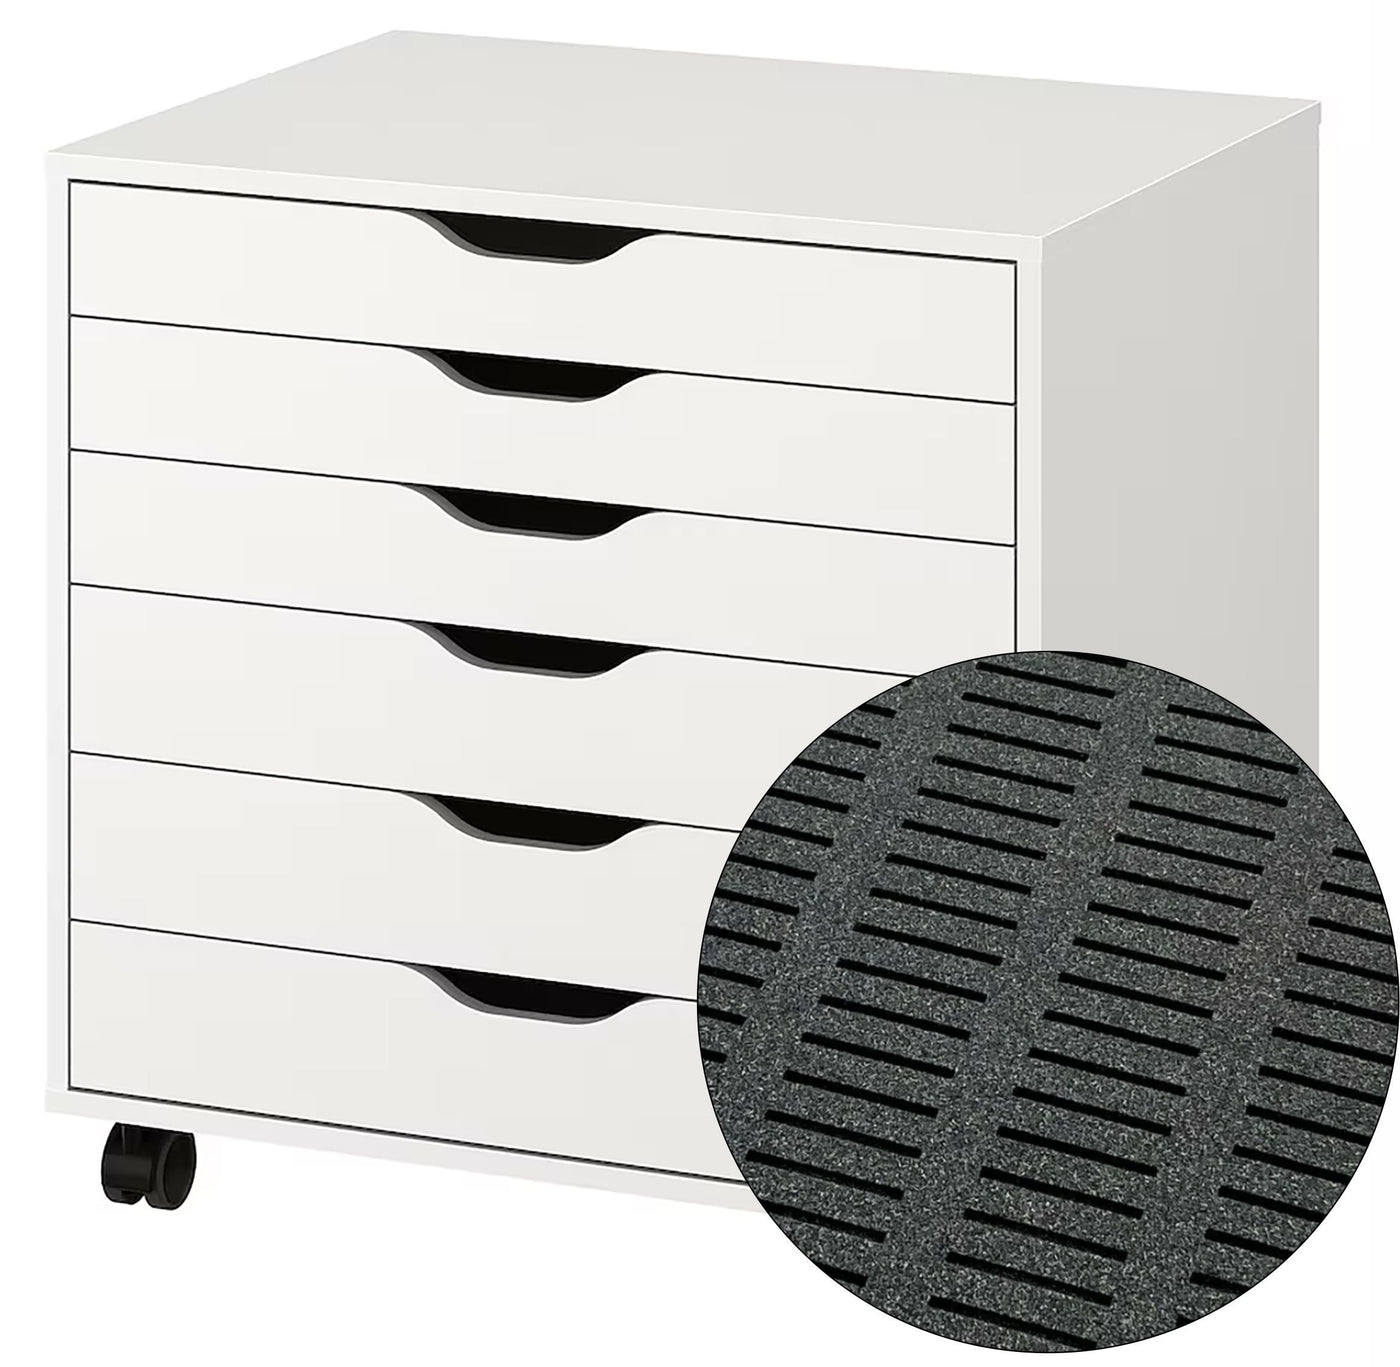 Foam inserts for wide IKEA Alex 6 drawer unit - storage for bobbins